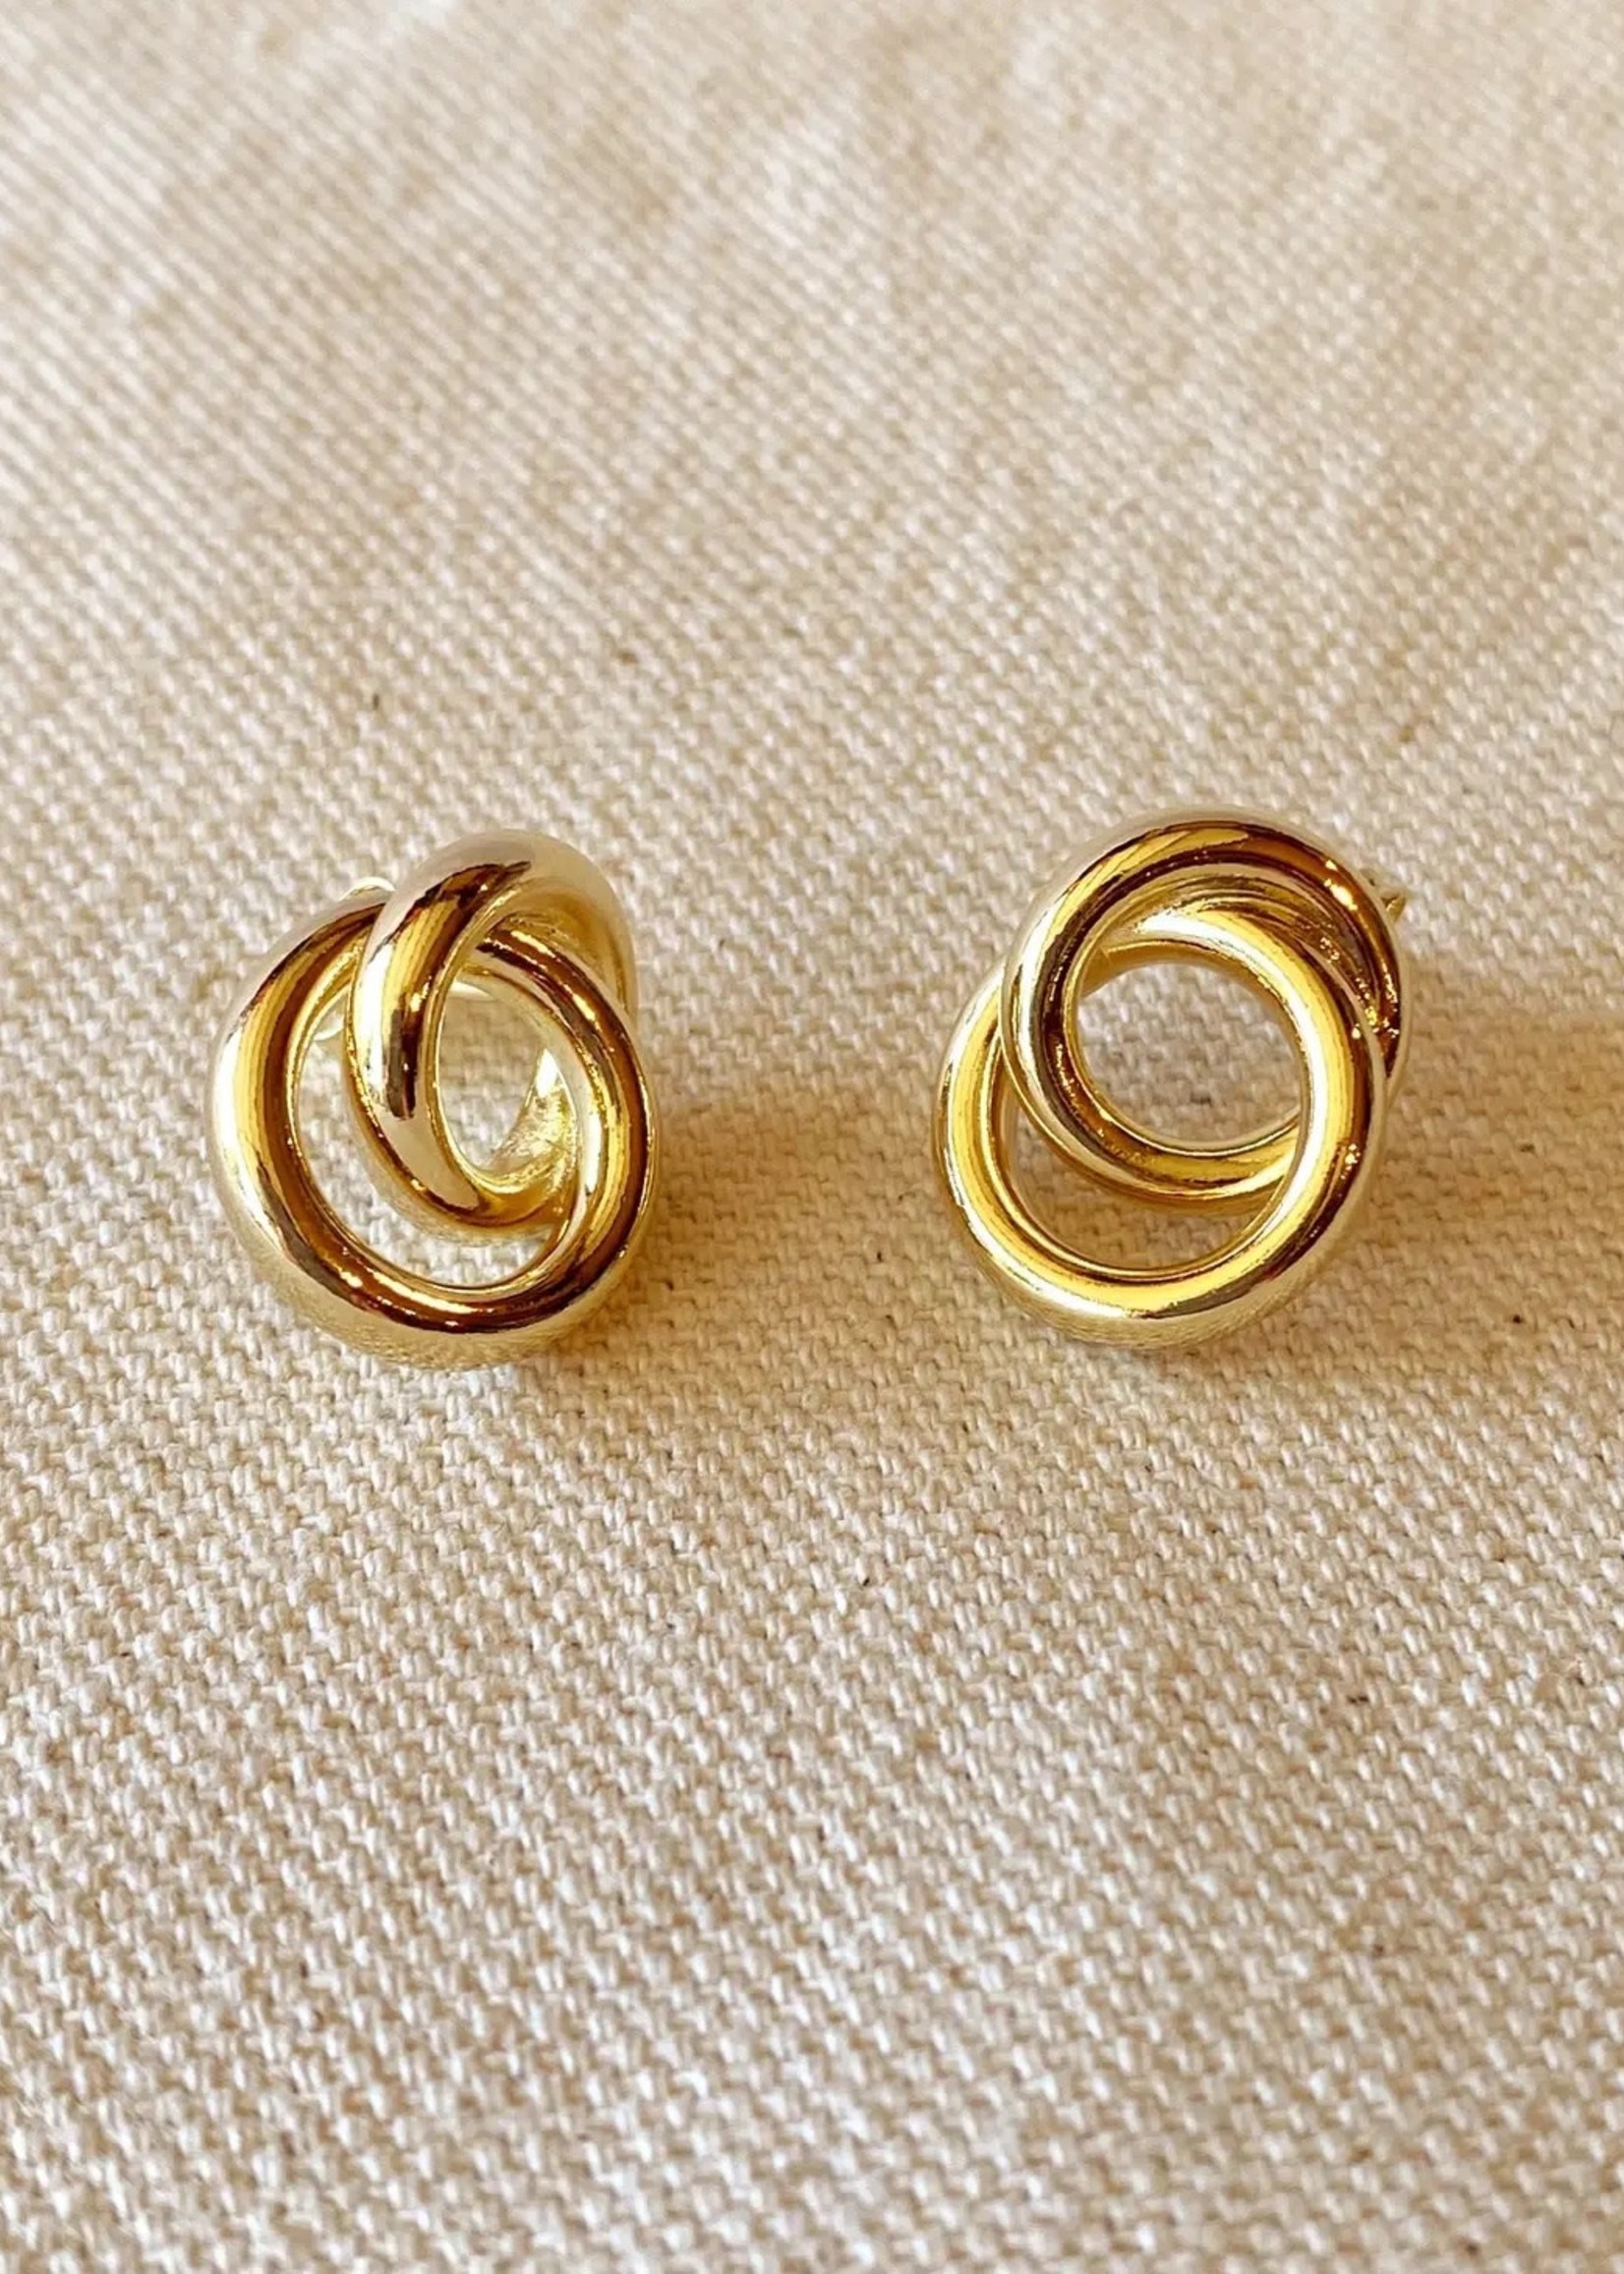 LeBLANC finds Double Circle Knot Stud Earrings